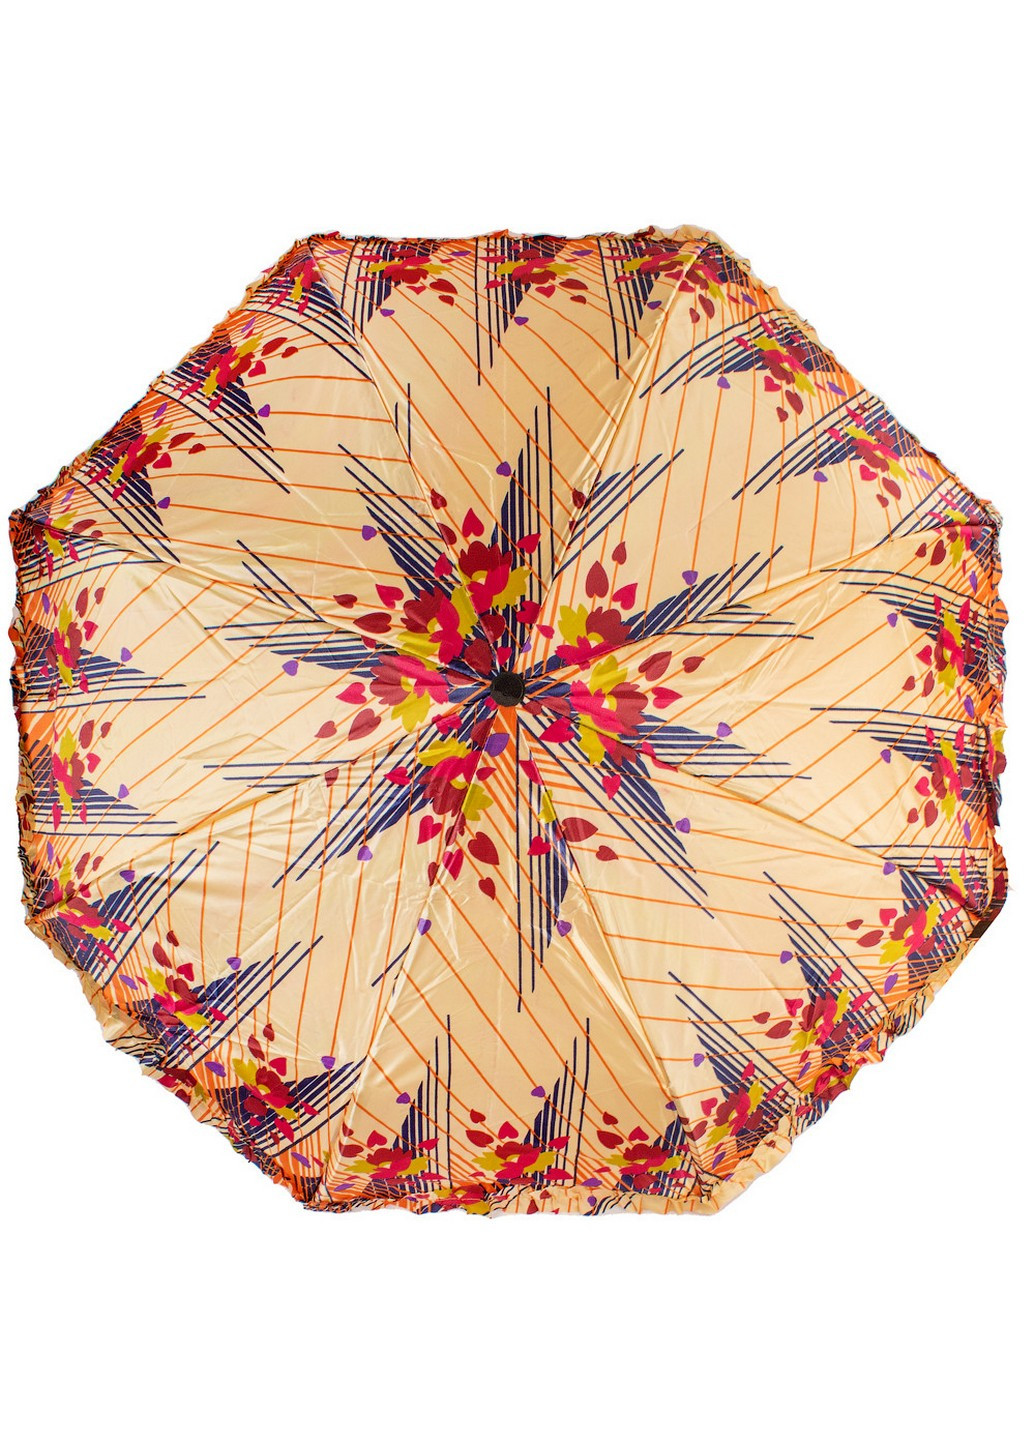 Зонт женский полуавтомат 98 см Eterno (255375156)